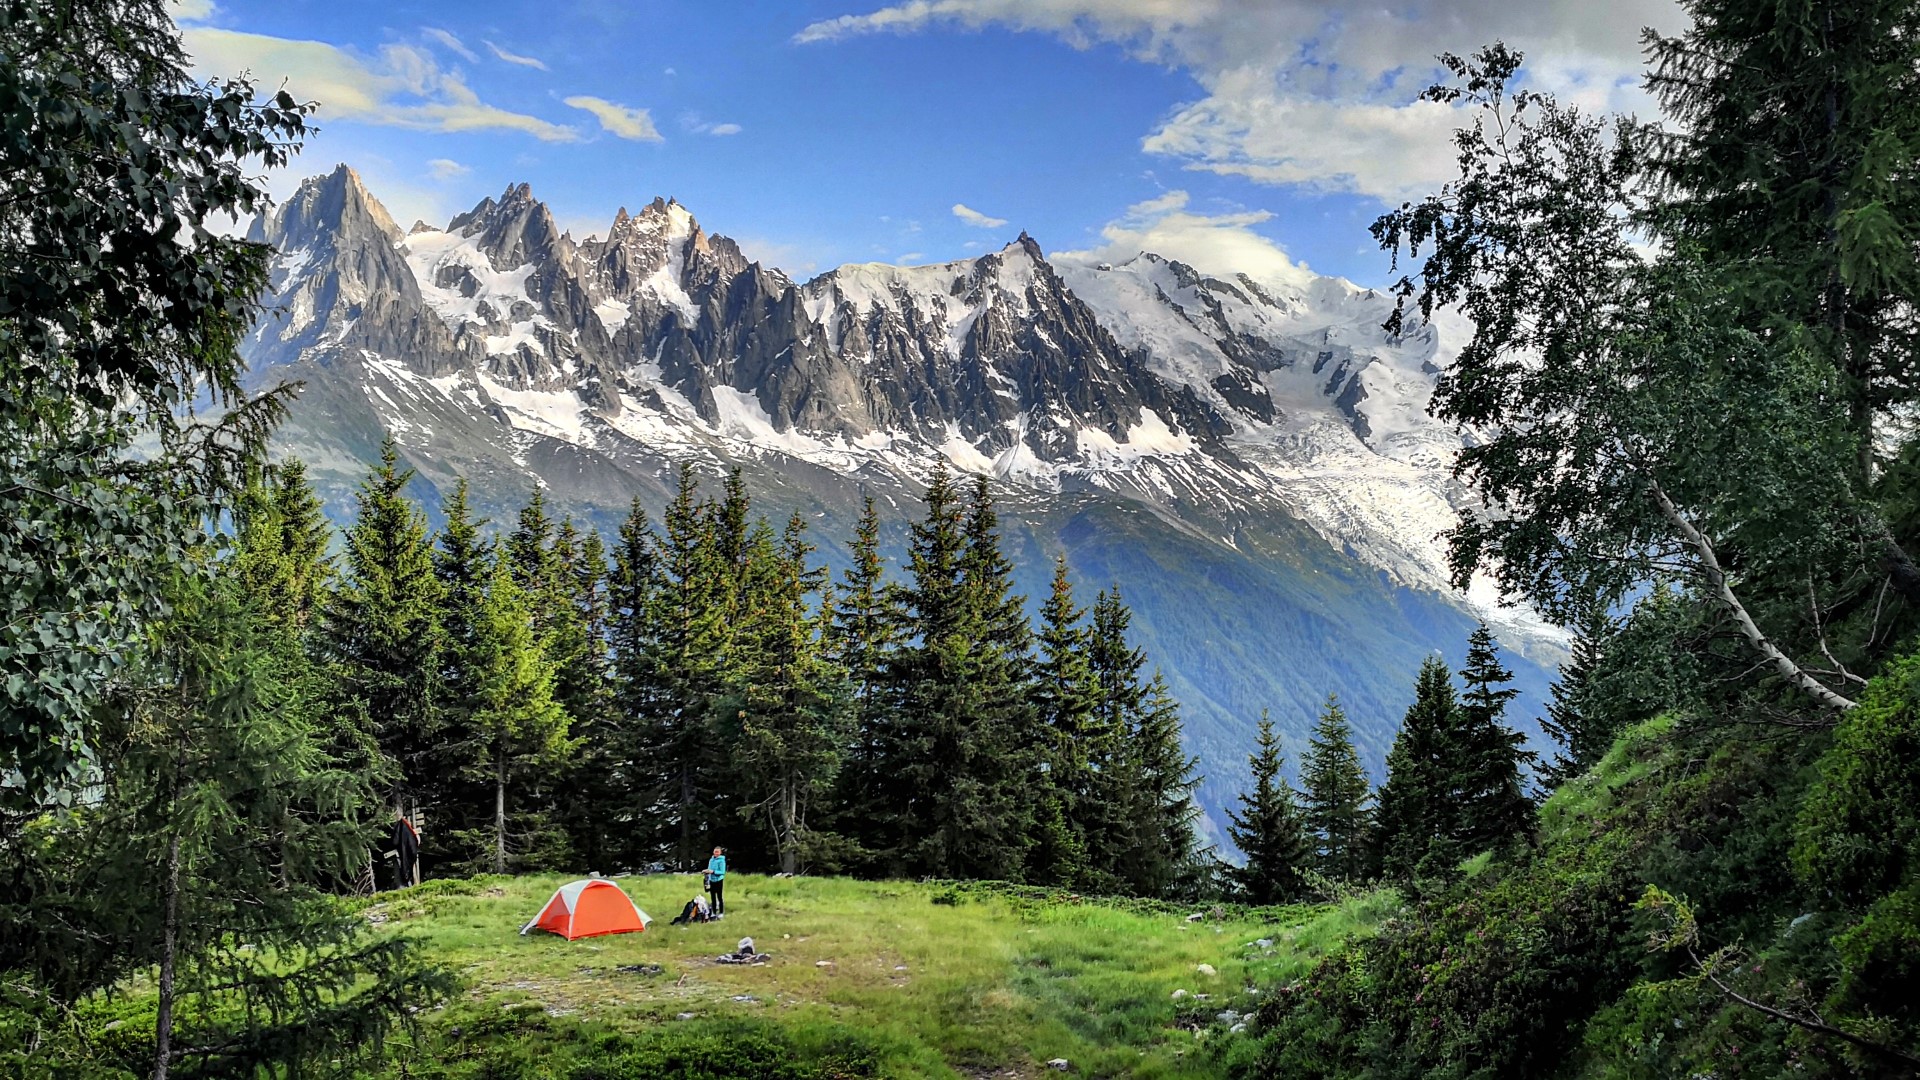 Danisek, 170km okolo Mt Blancu